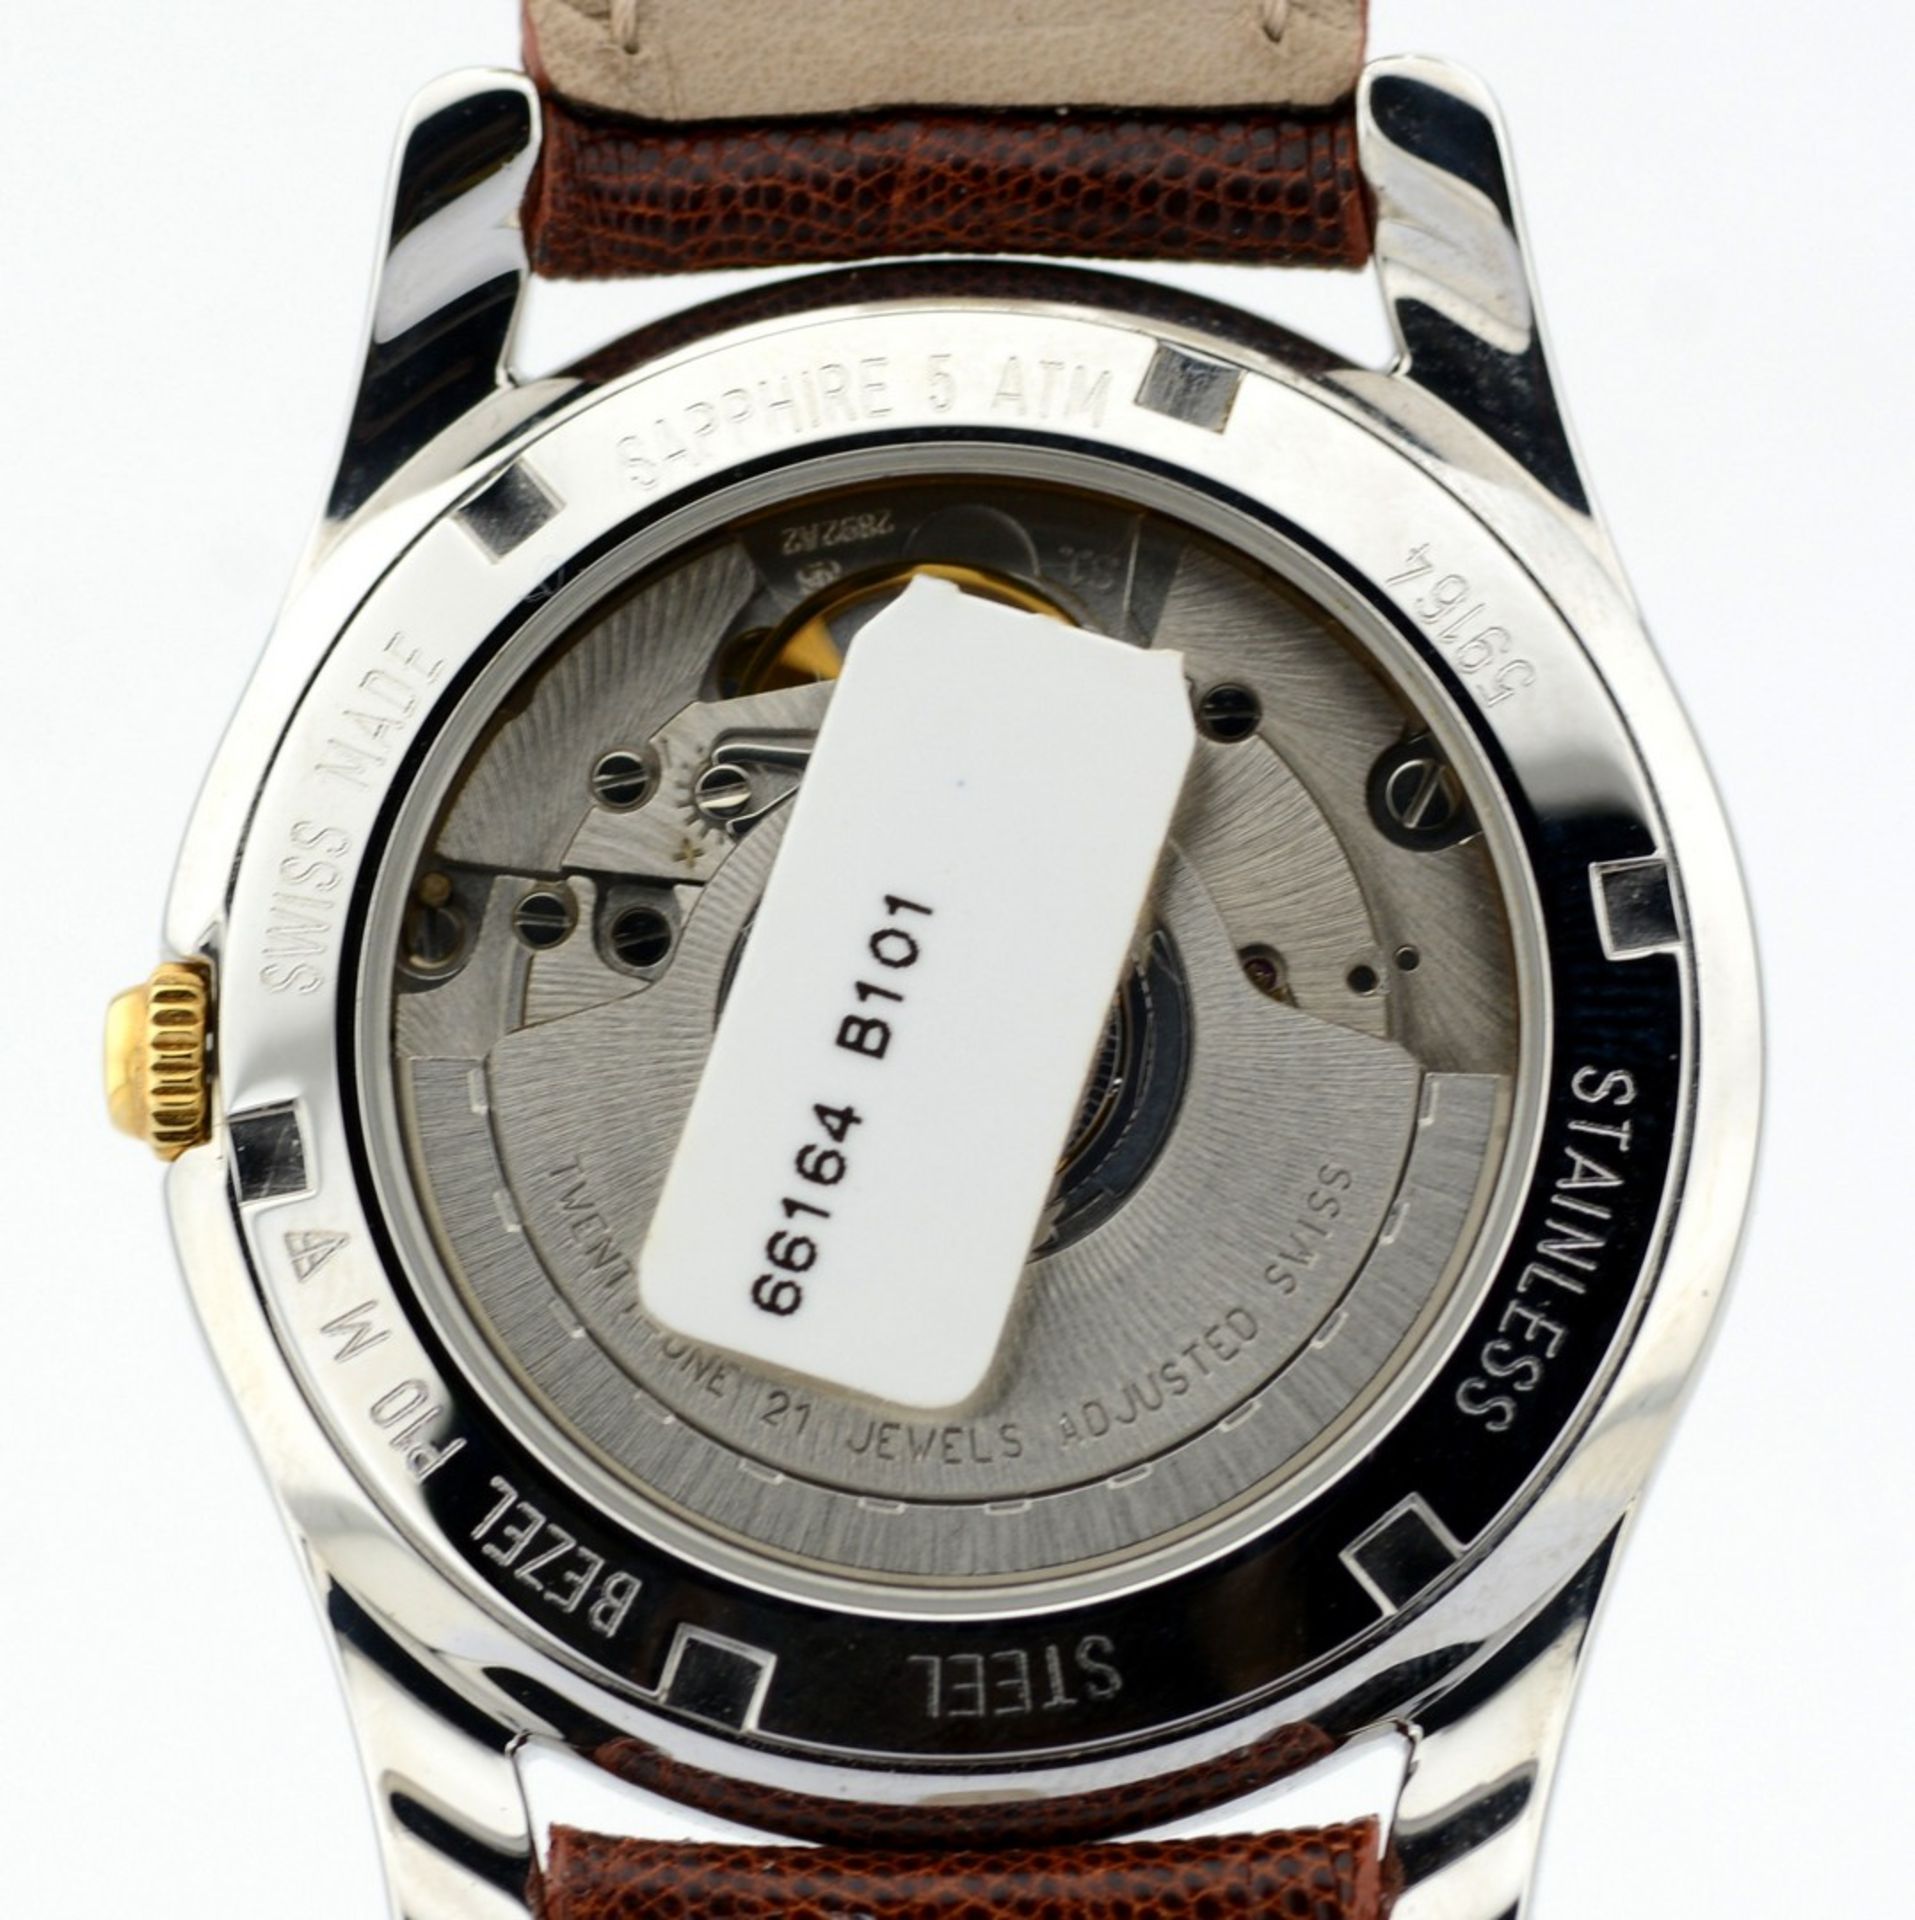 Edox / Automatic Date - Gentlemen's Gold/Steel Wristwatch - Image 4 of 7